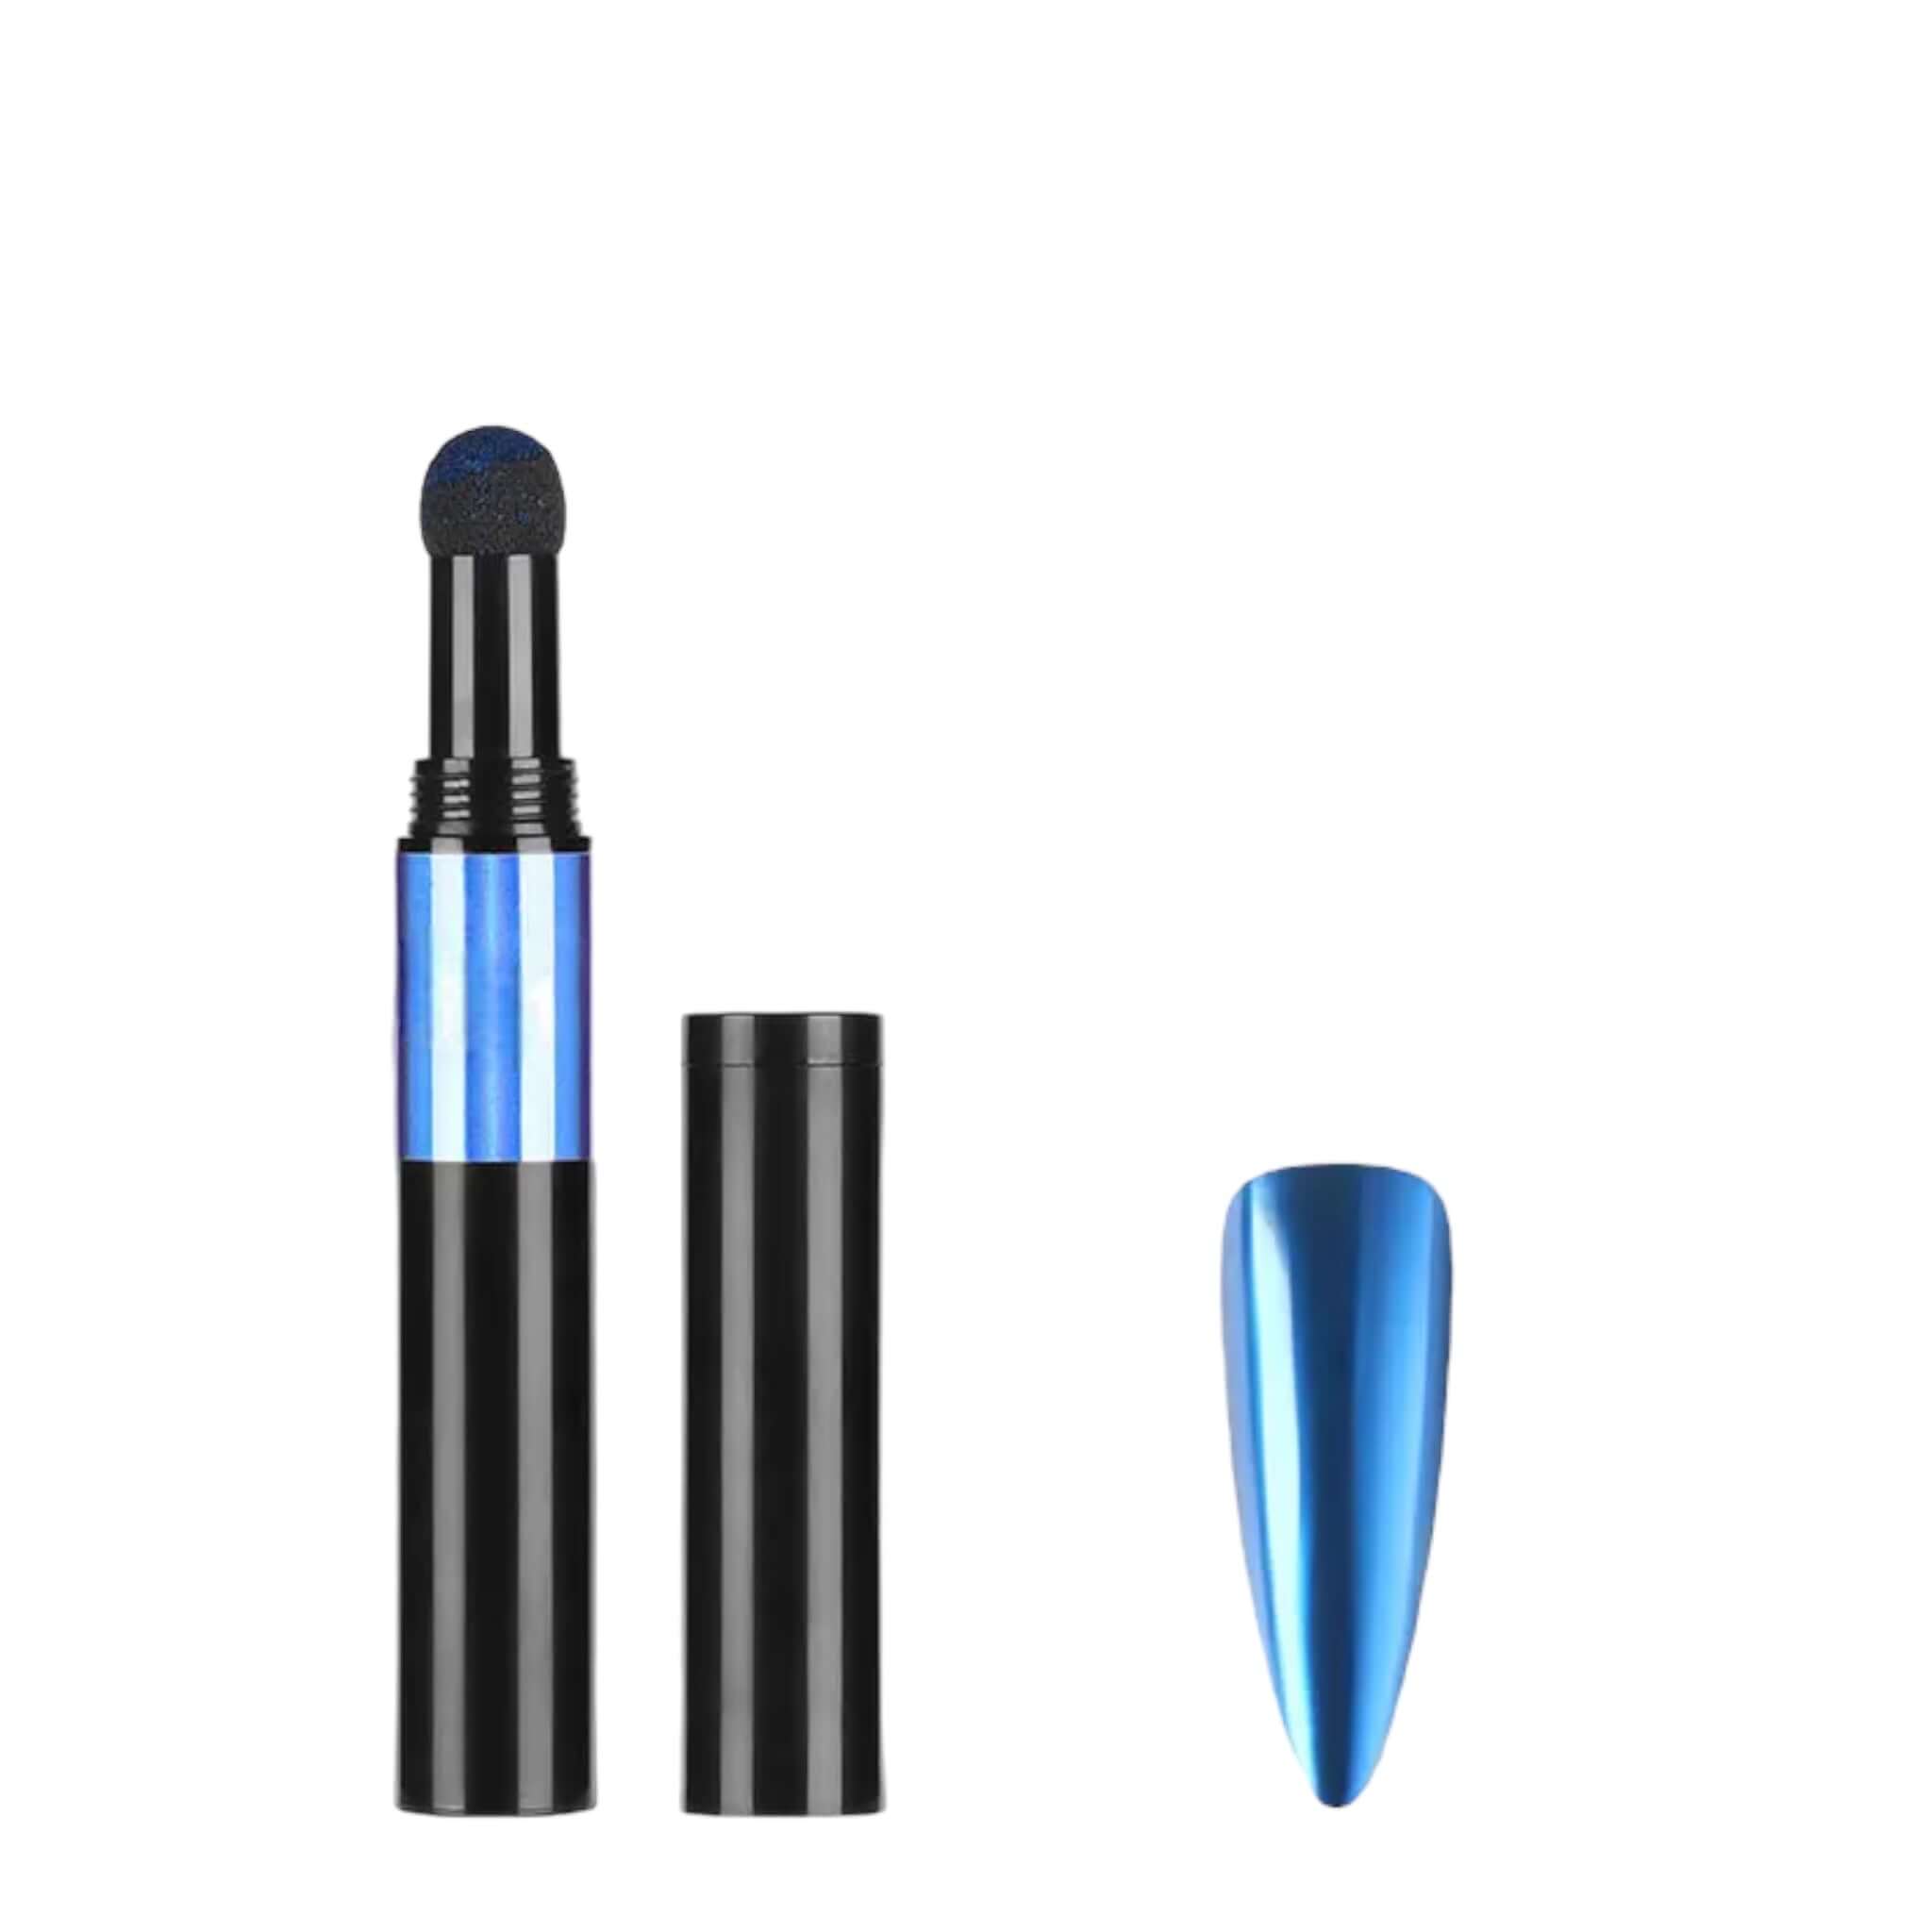 Chrom Pigment Stift Chrom Pigment StiftChrom Stift Farbe: Chrom Stift Blau